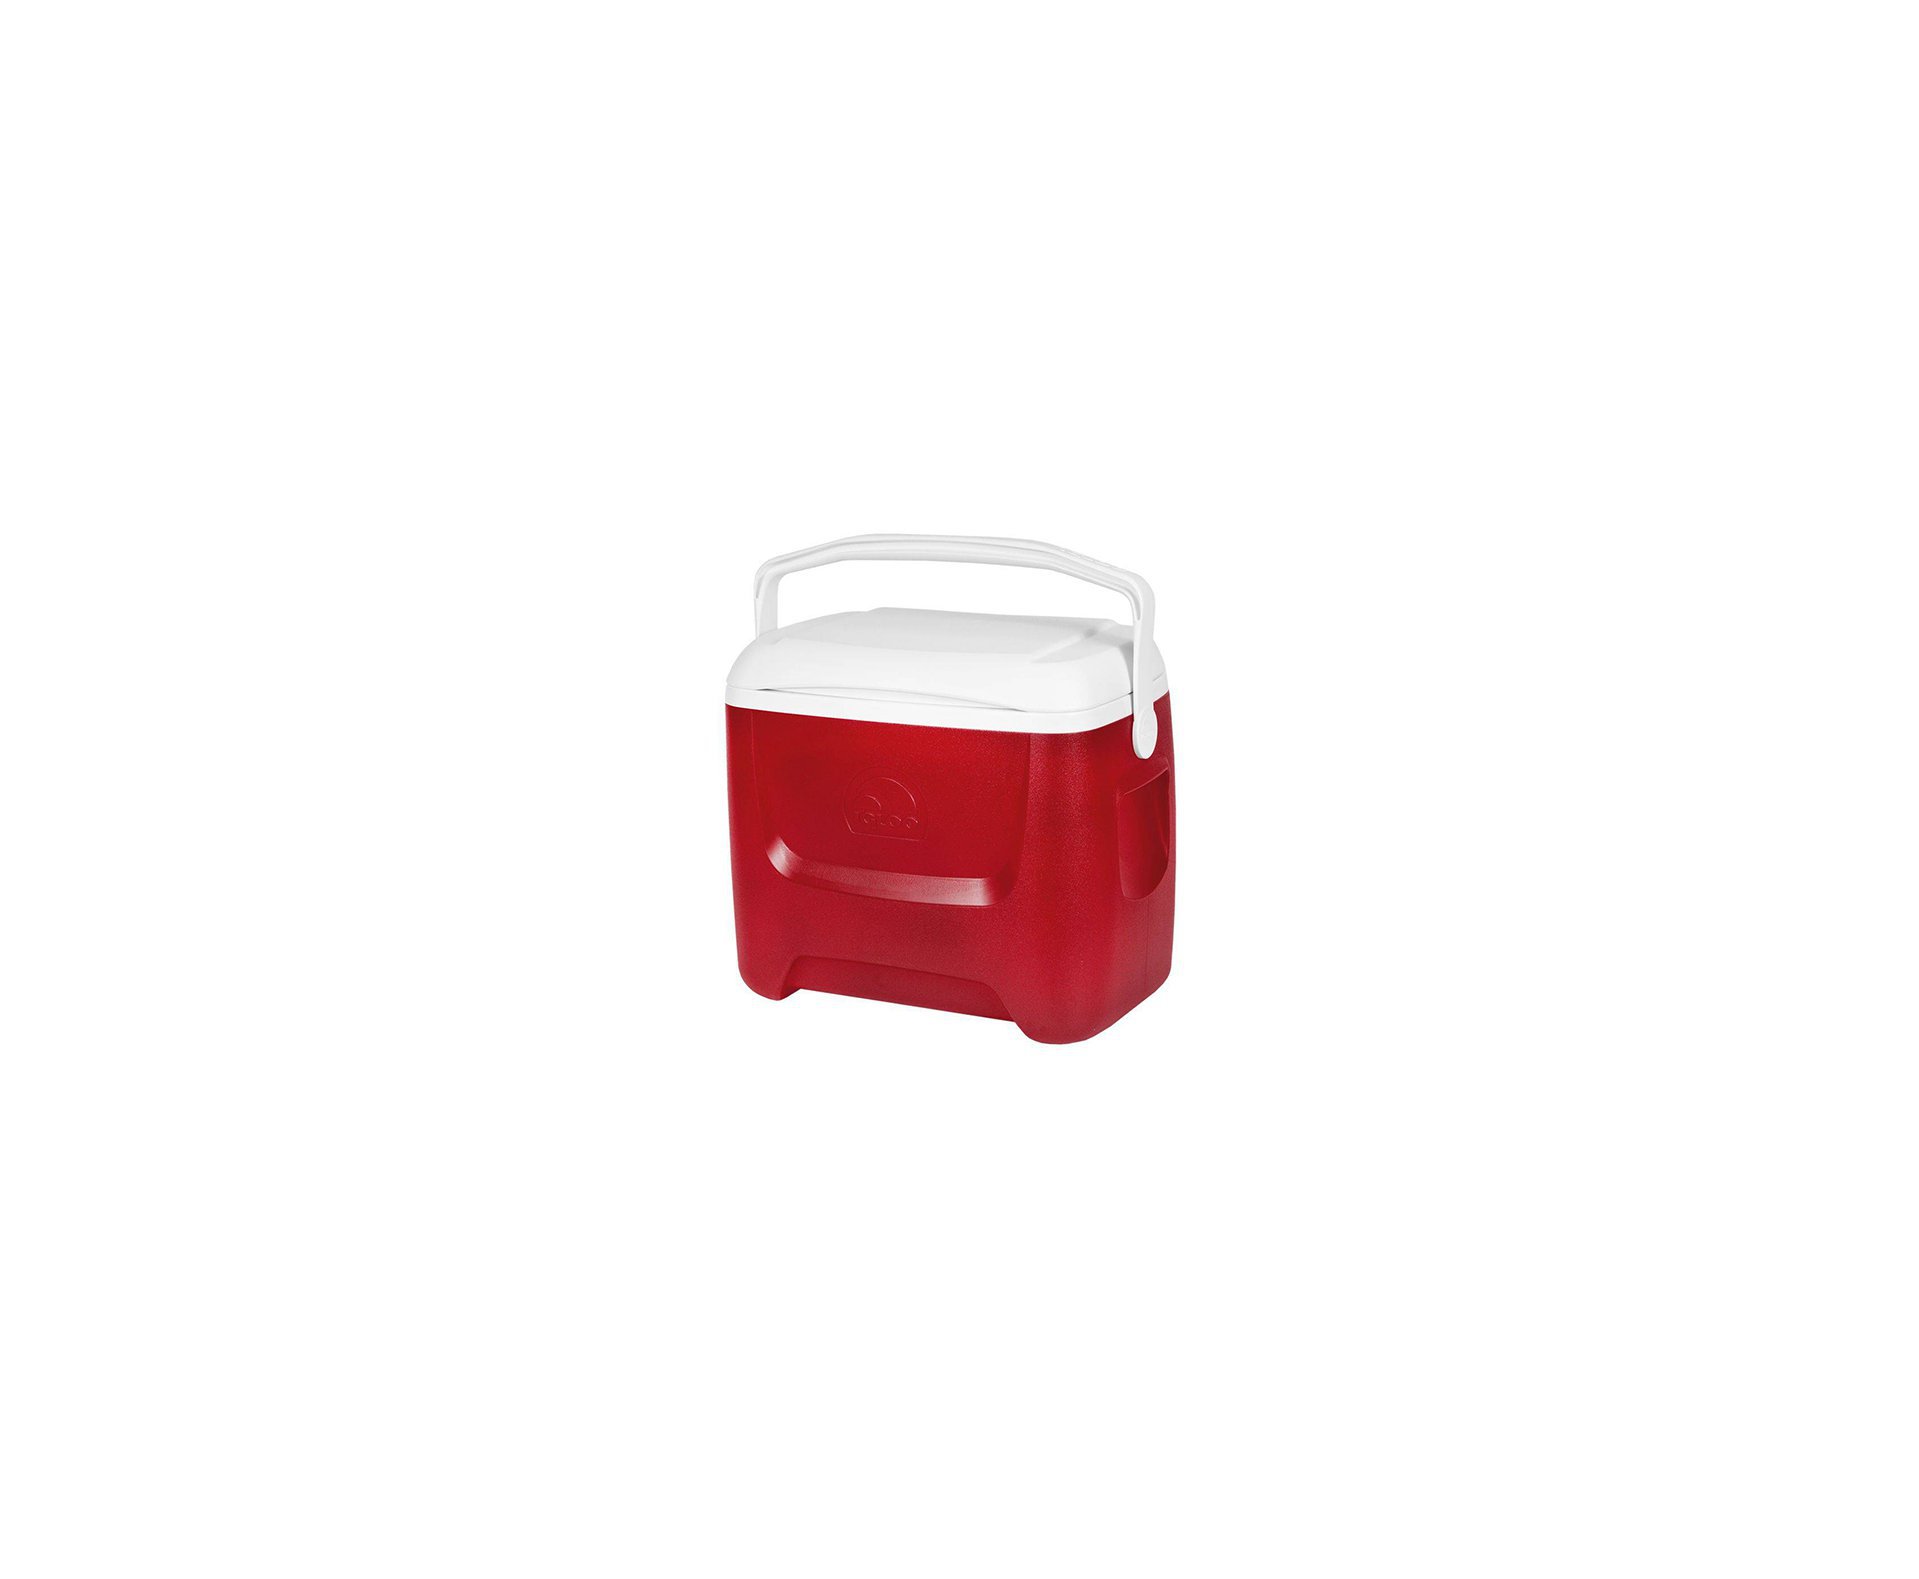 Caixa Térmica Cooler Igloo Usa 28qt 26,5l Vermelha Com Alça Transporte